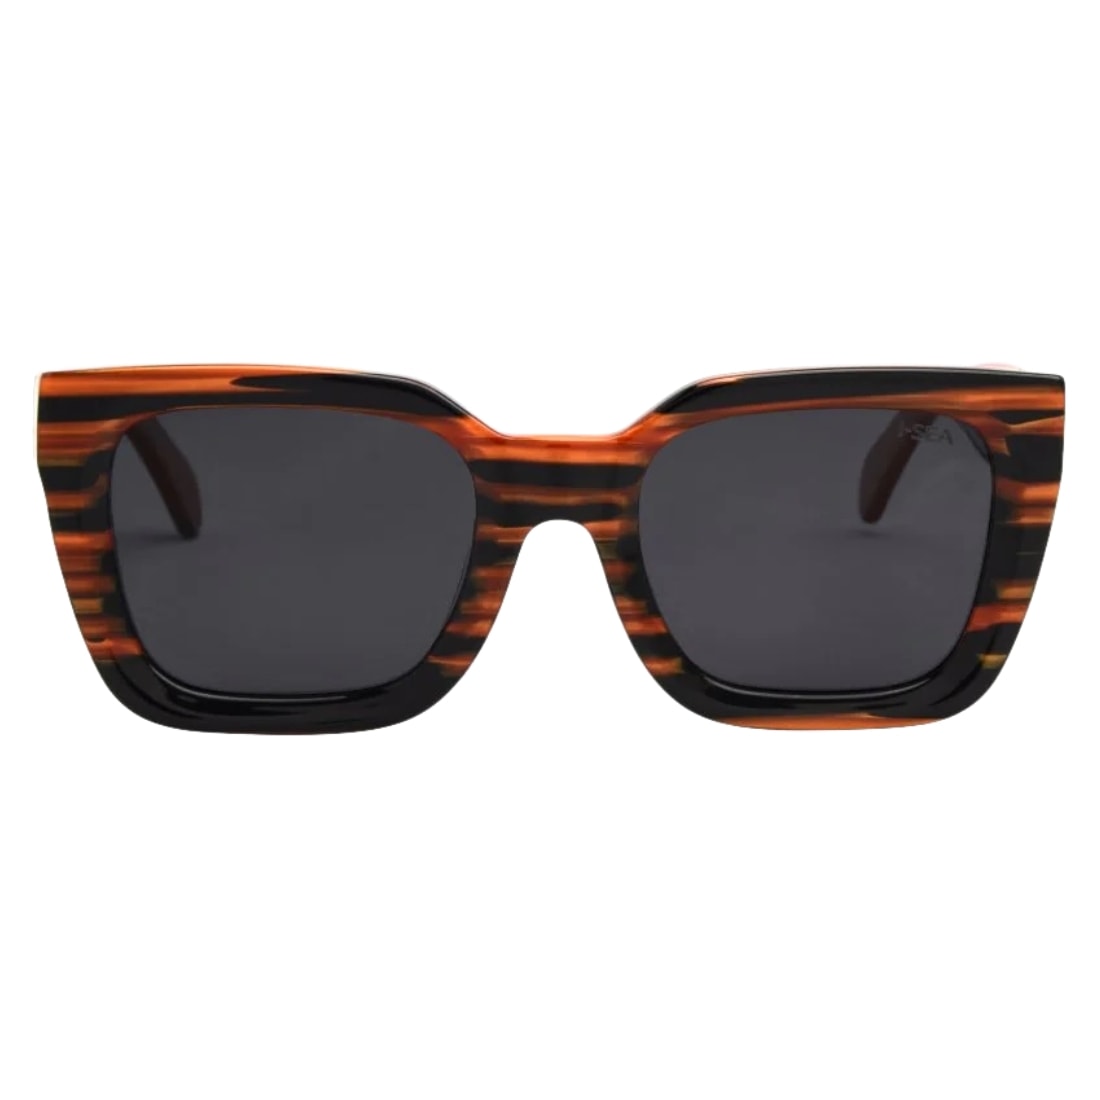 I-Sea Alden Sunglasses - Tigers Eye/Smoke Polarised - Square/Rectangular Sunglasses by I-Sea